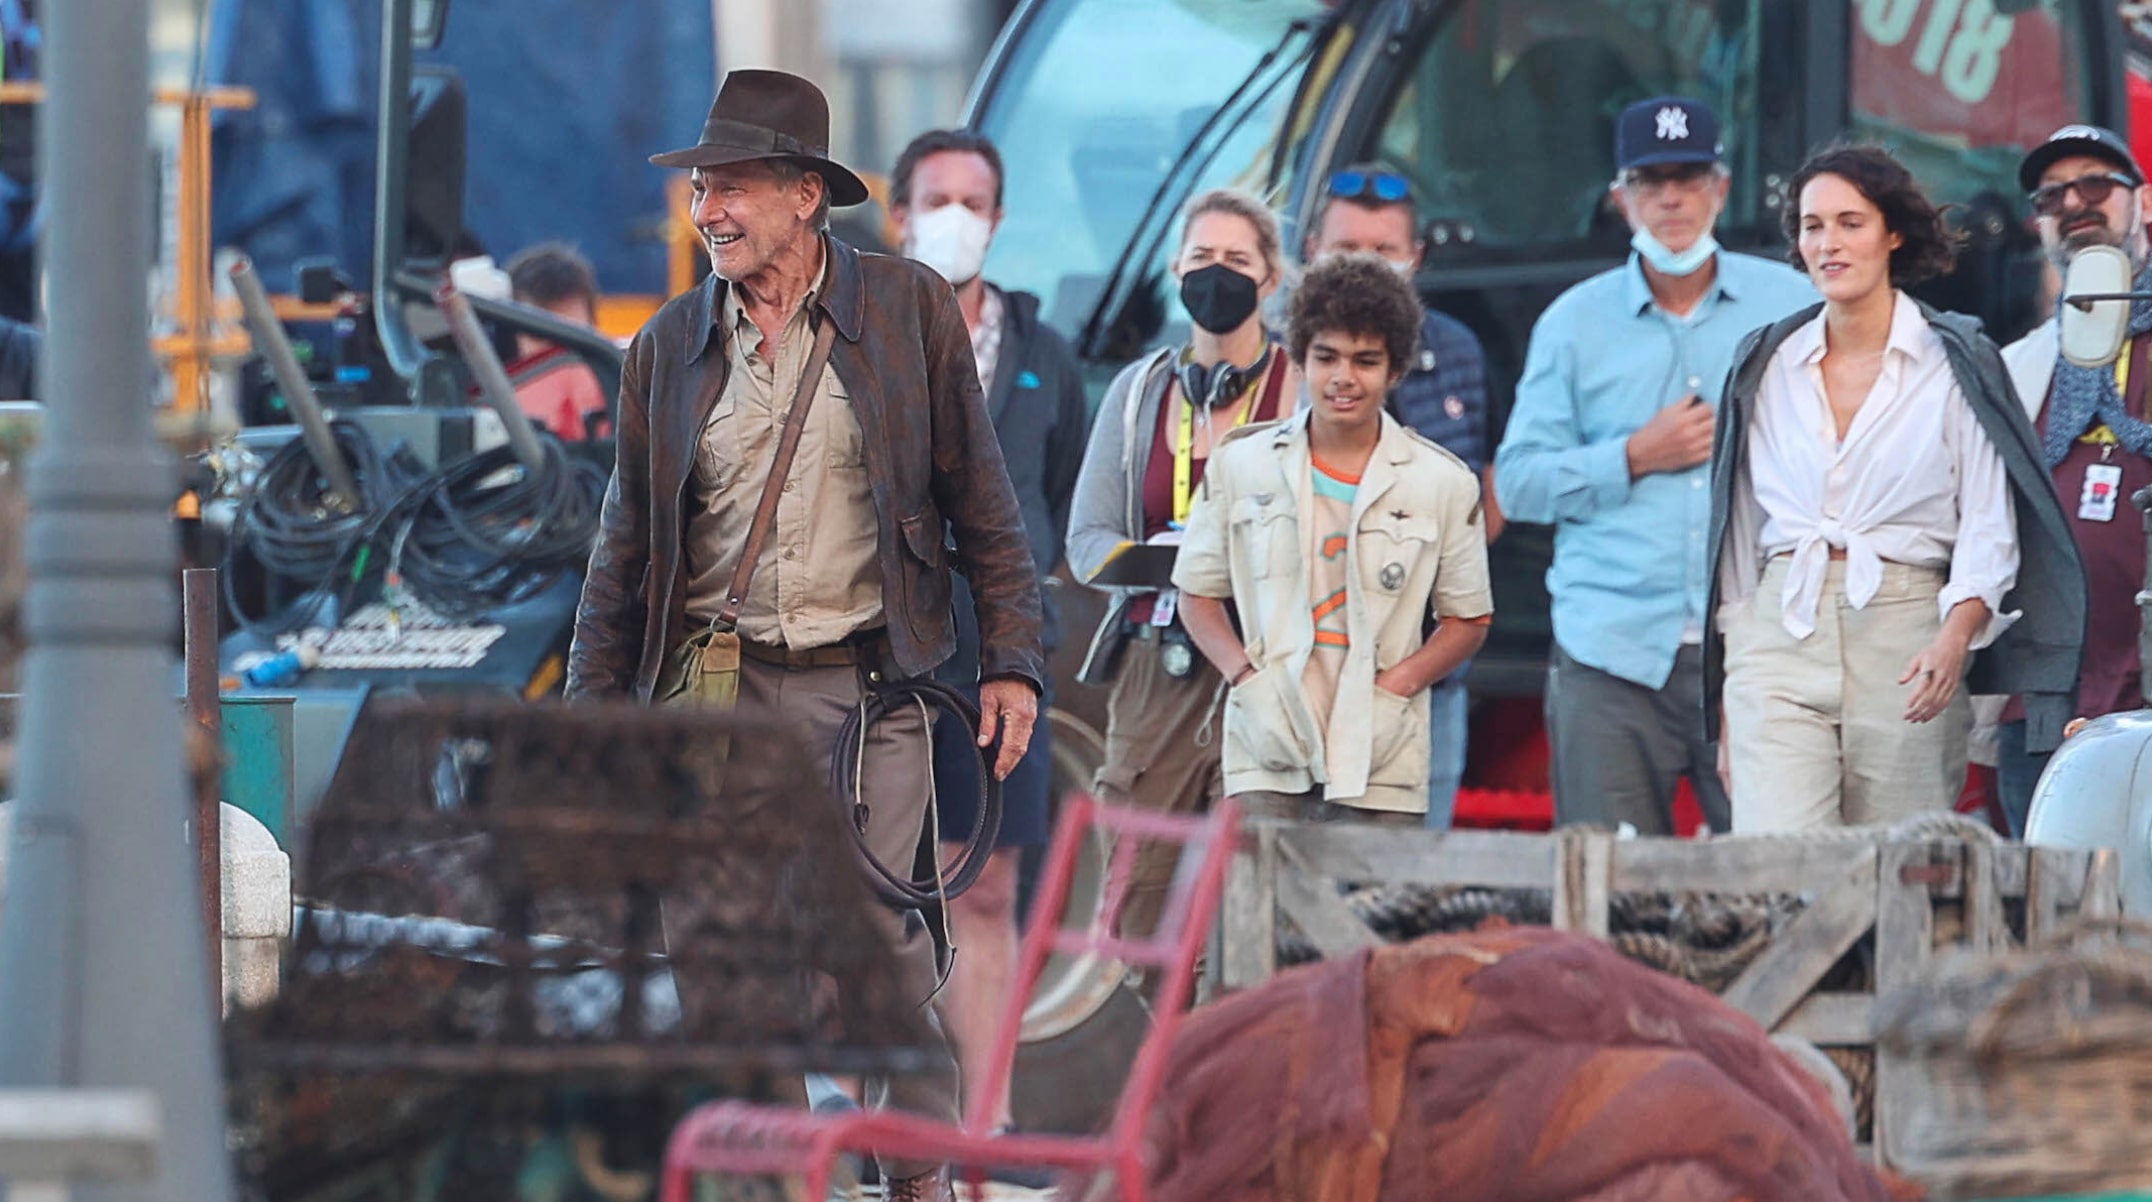 Indiana Jones - Indiana Jones added a new photo.